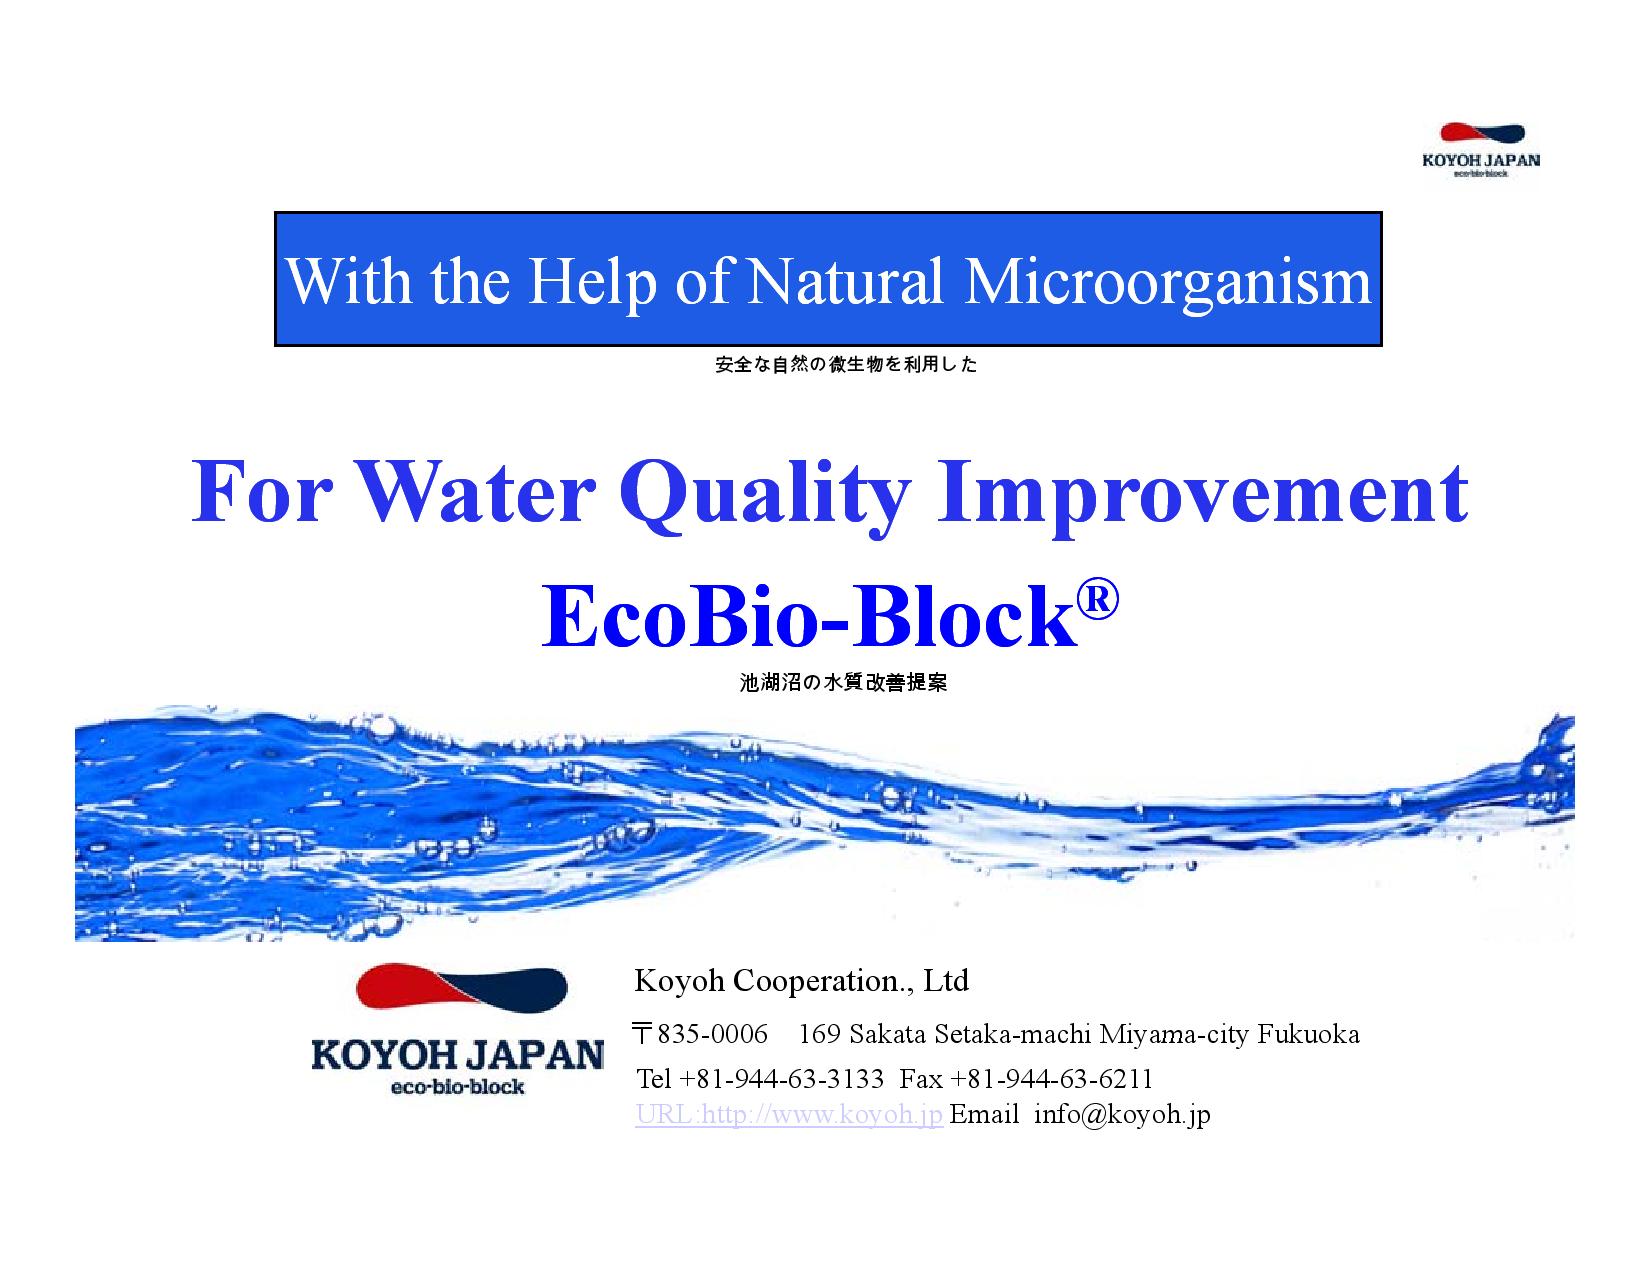 Koyoh Cooperation., Ltd: For Water Quality Improvement EcoBio-Block